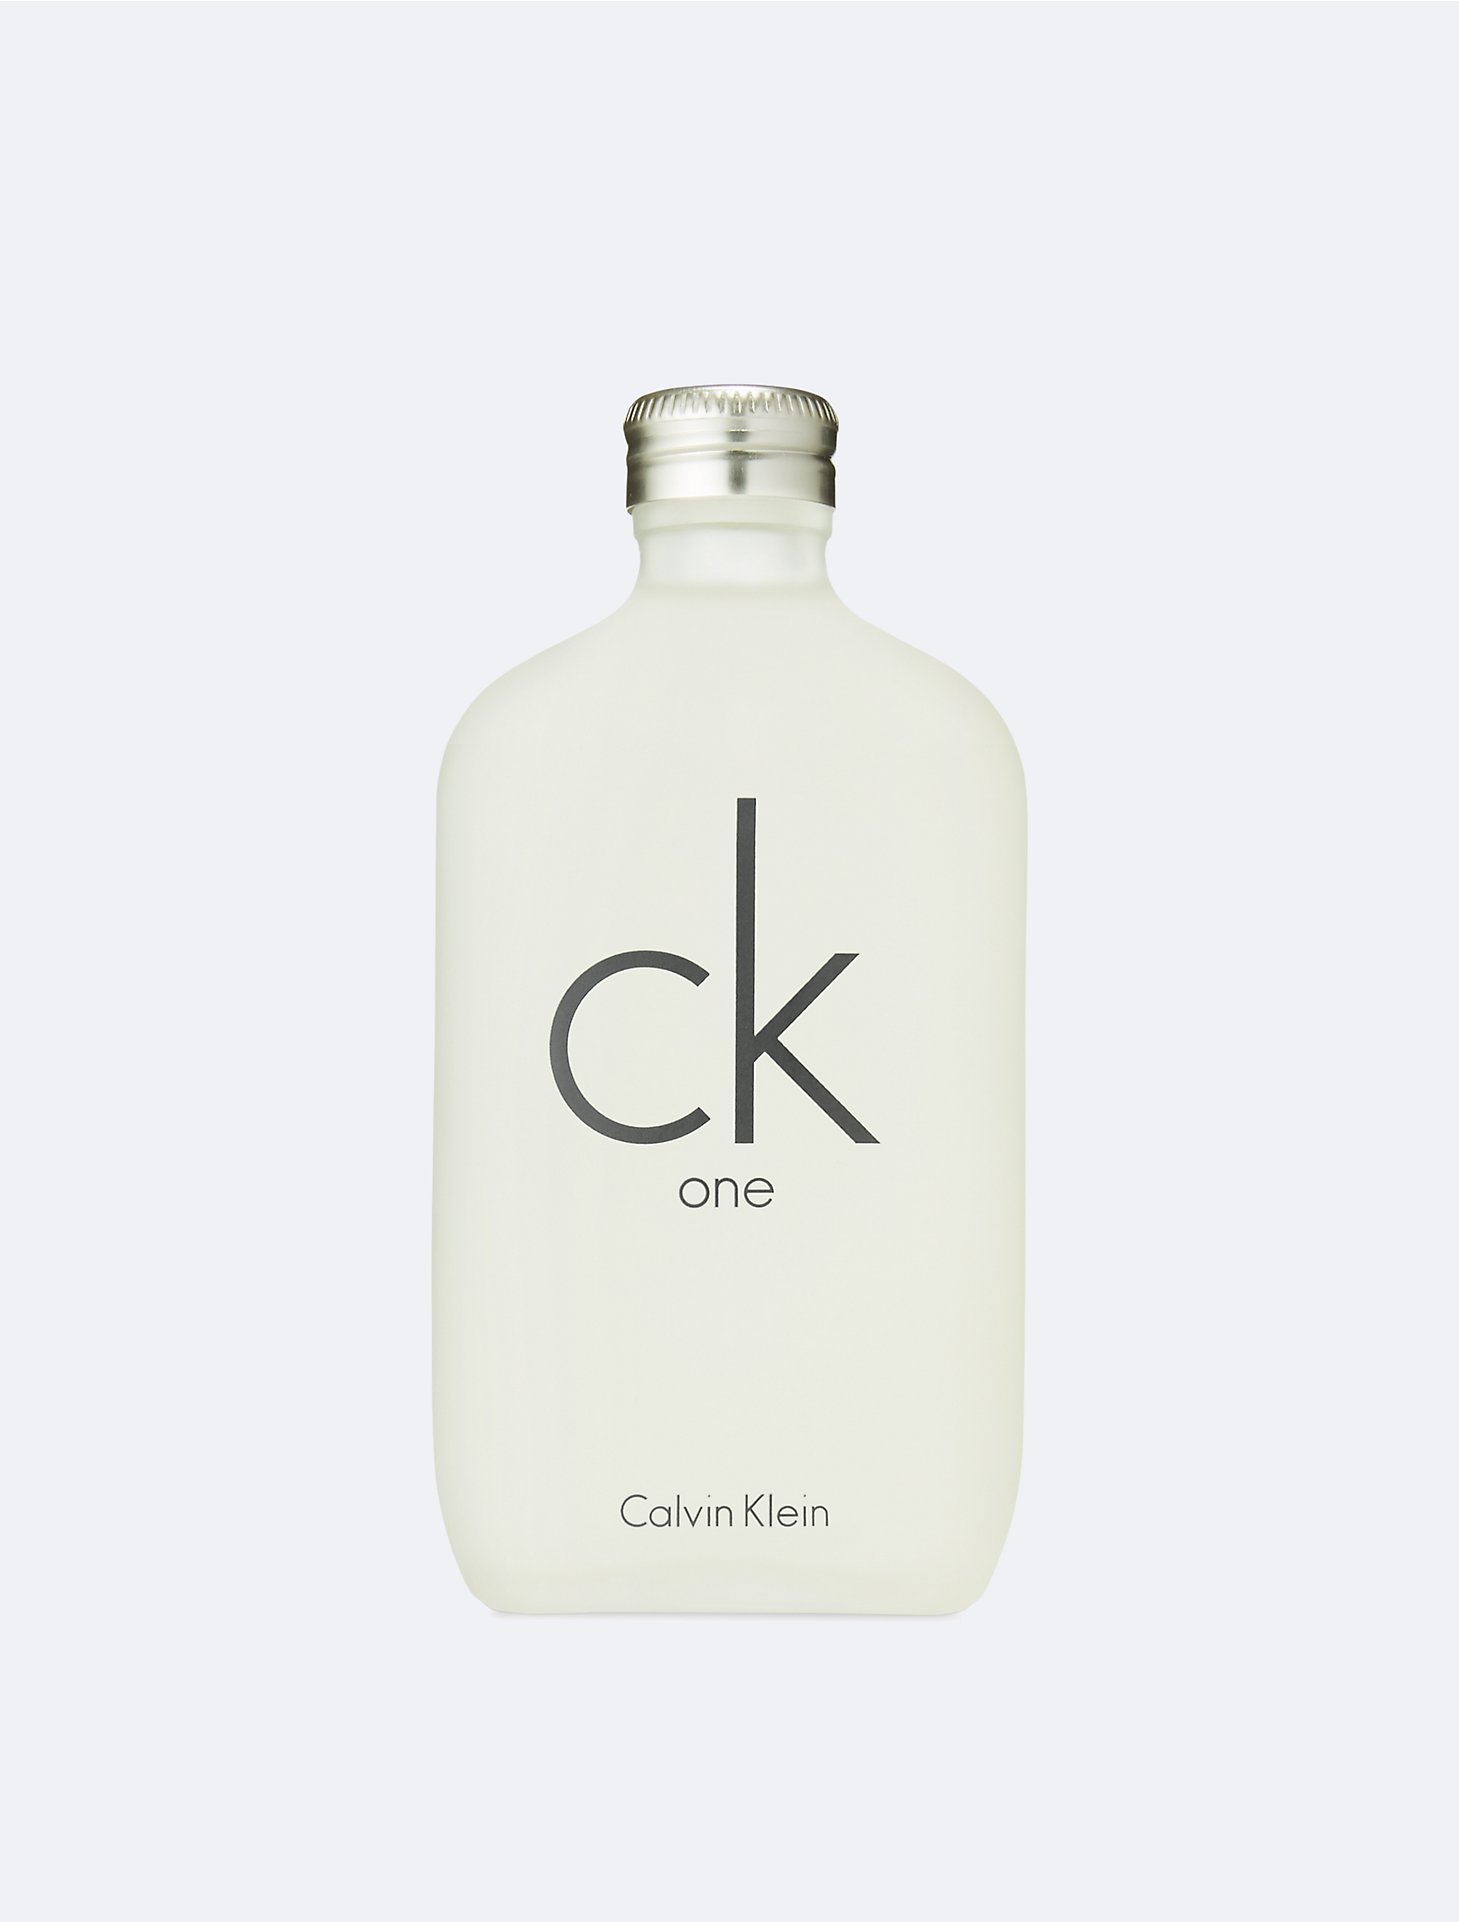 Descubrir 70+ imagen calvin klein cologne white bottle